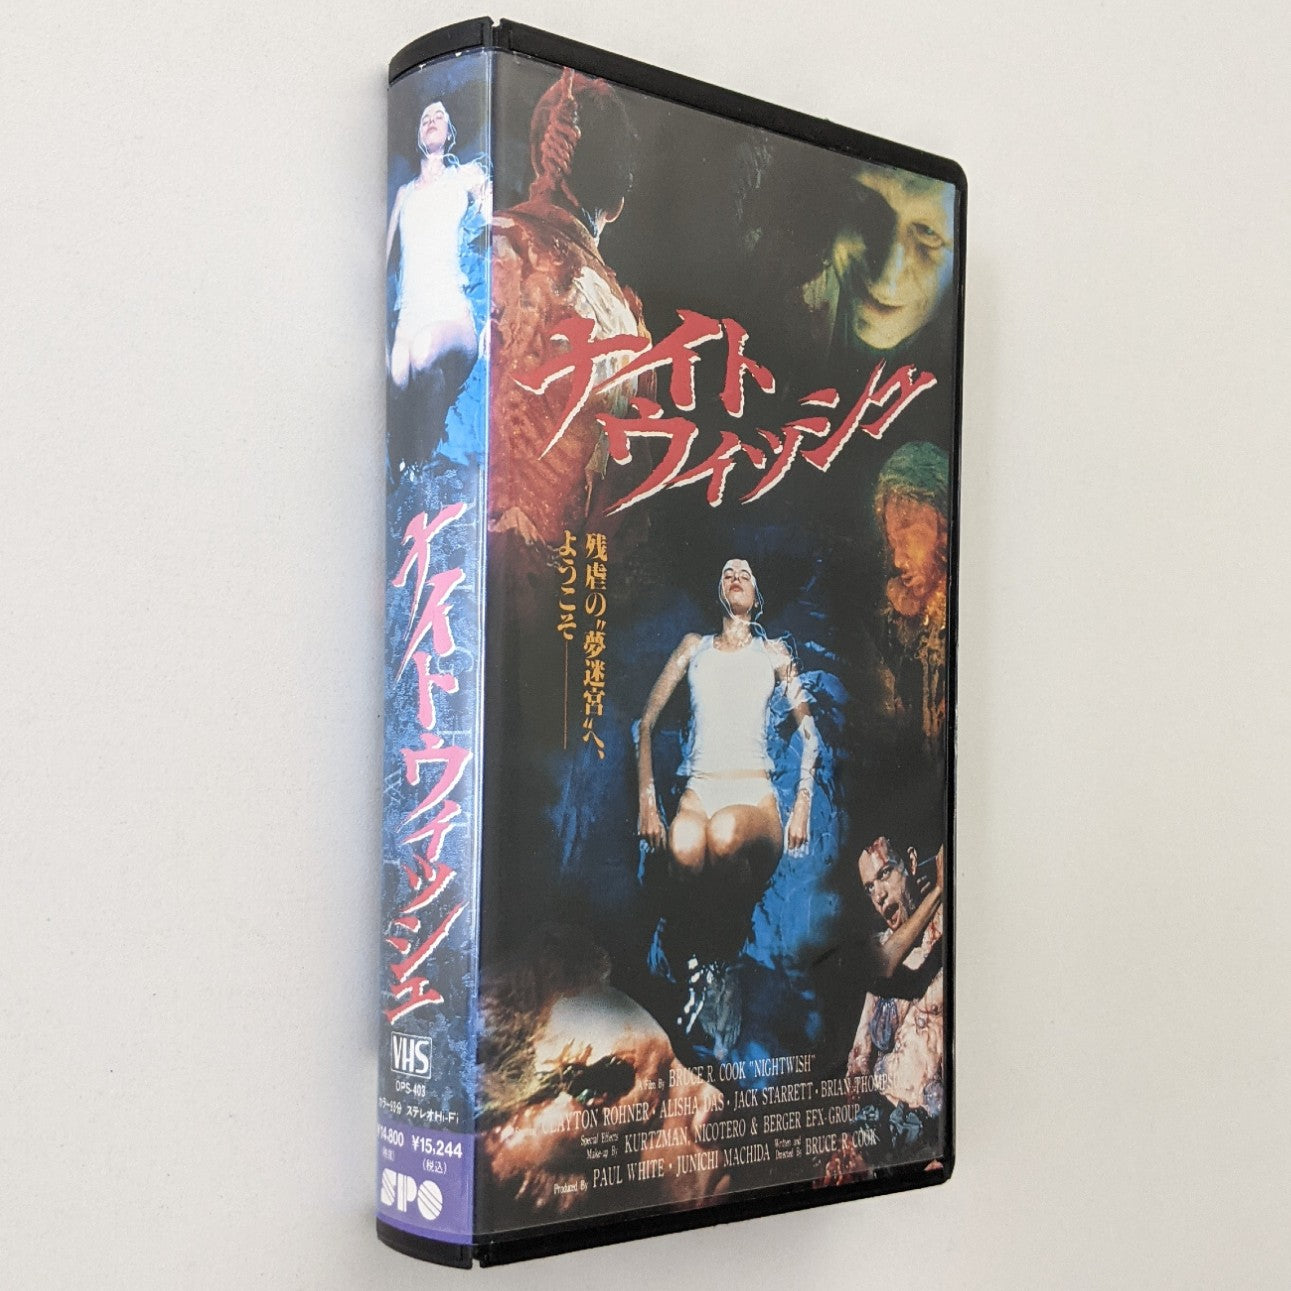 Nightwish (1991) Japanese VHS